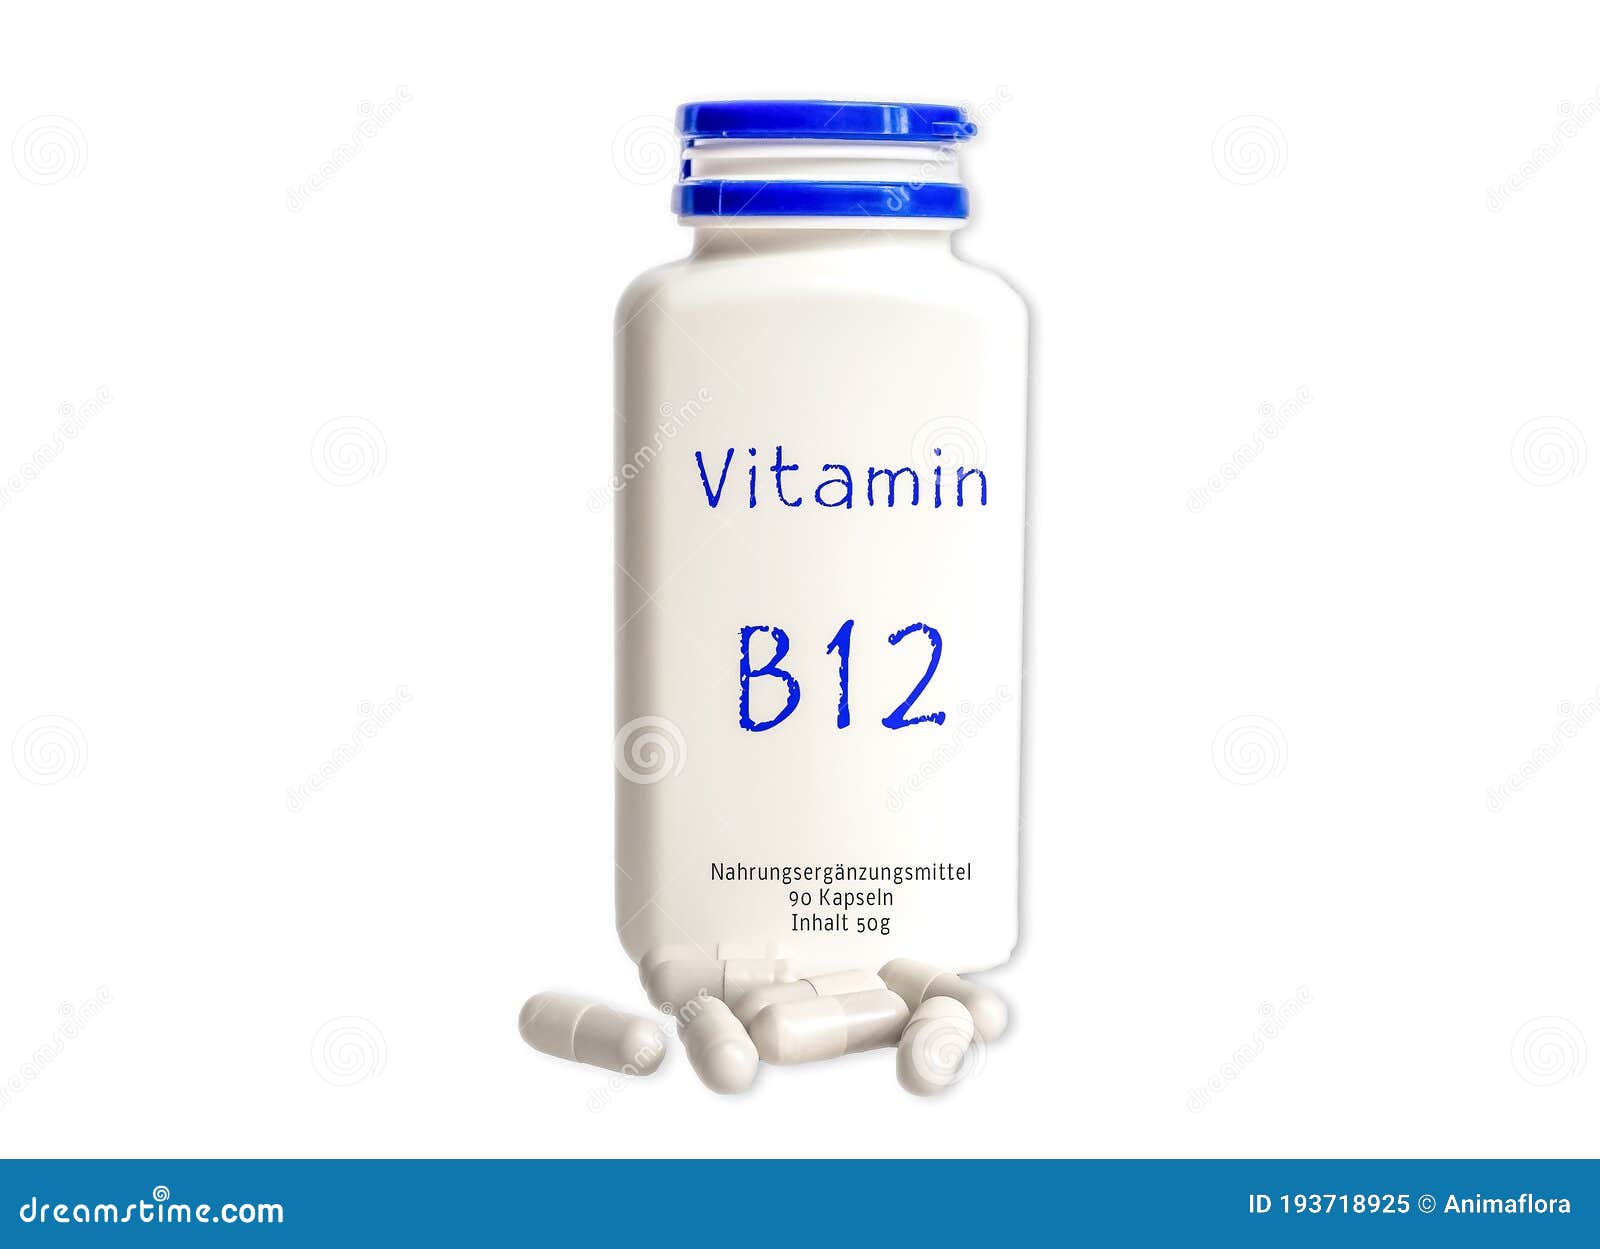 vitamin b12-dosis white background image